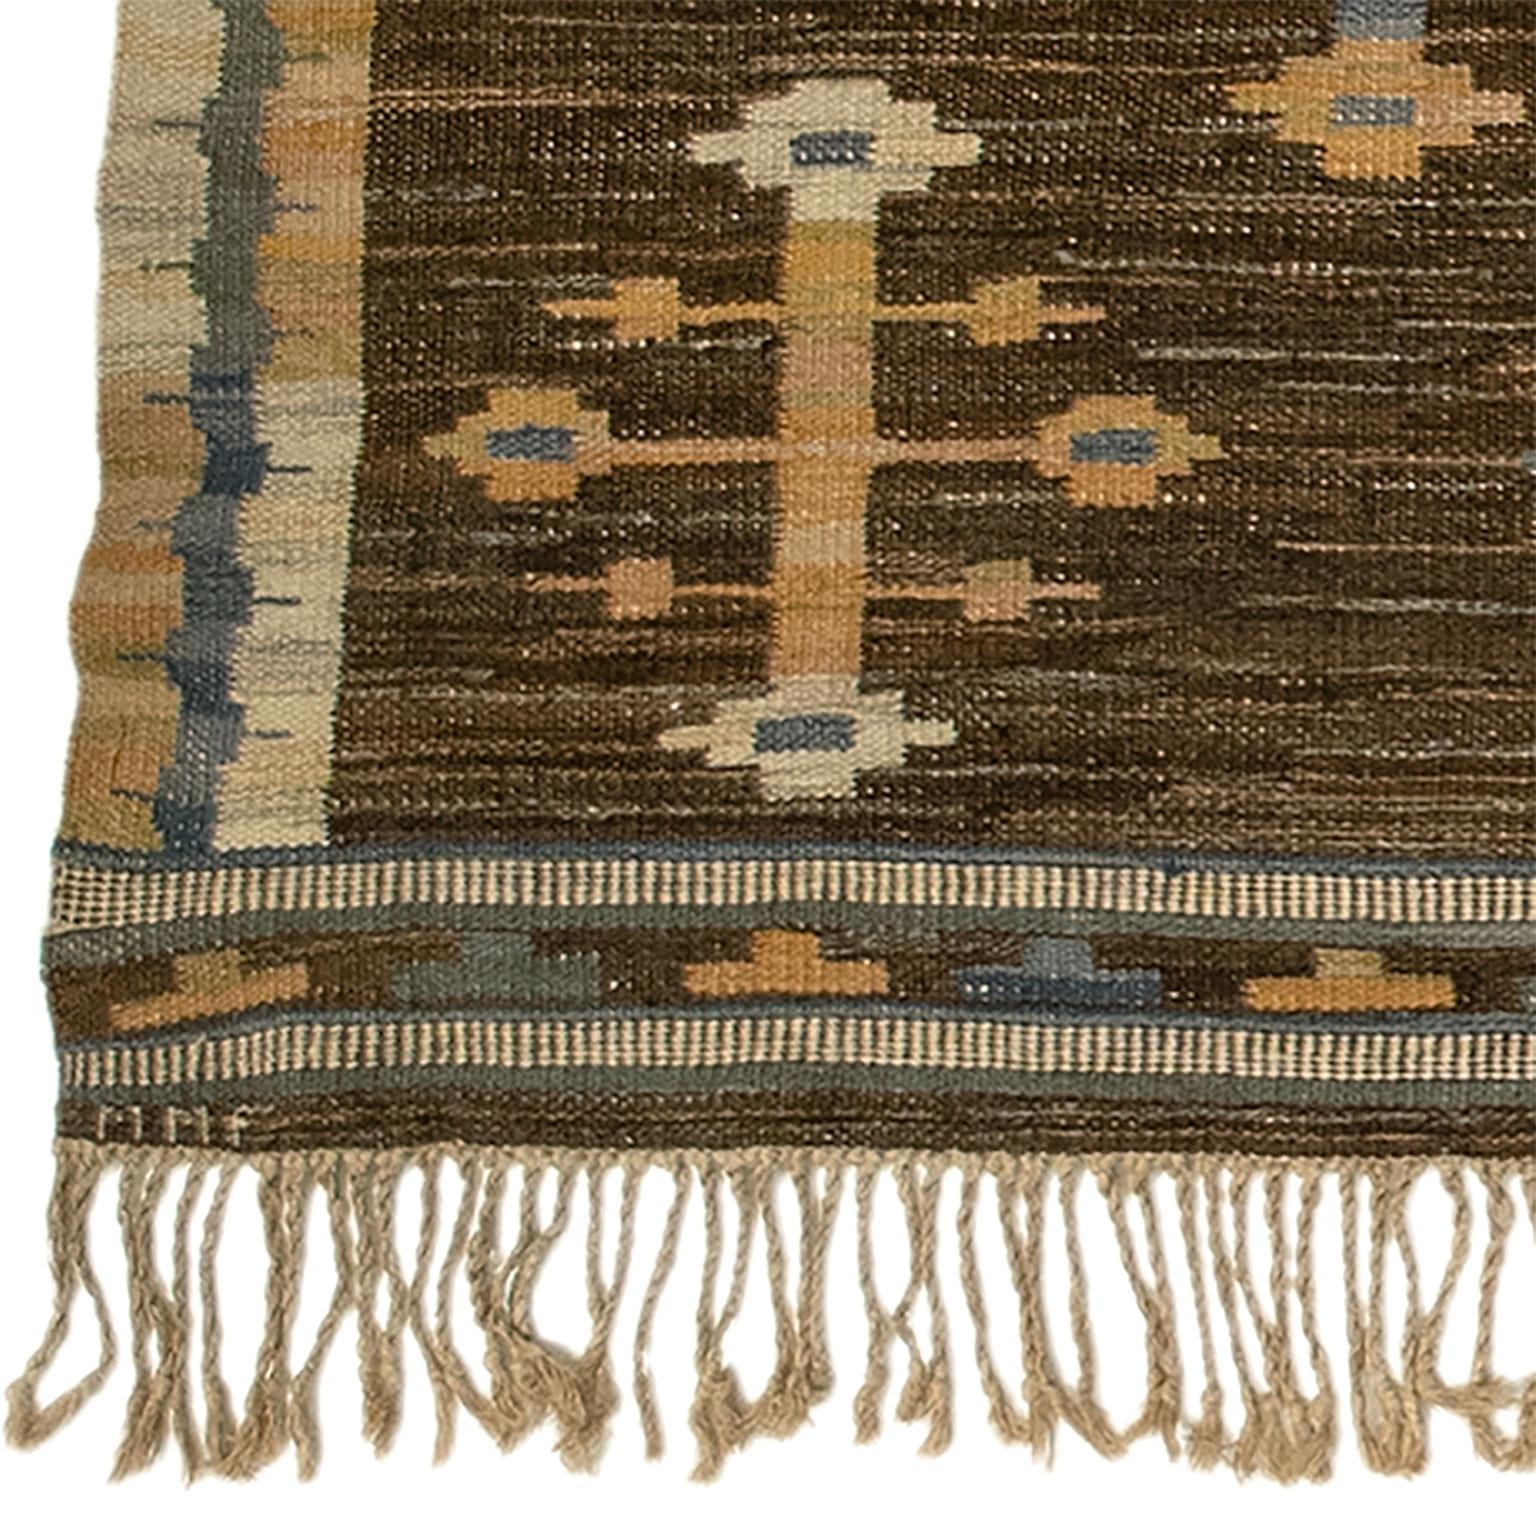 Mid 20th century Swedish rug,
Initialed 